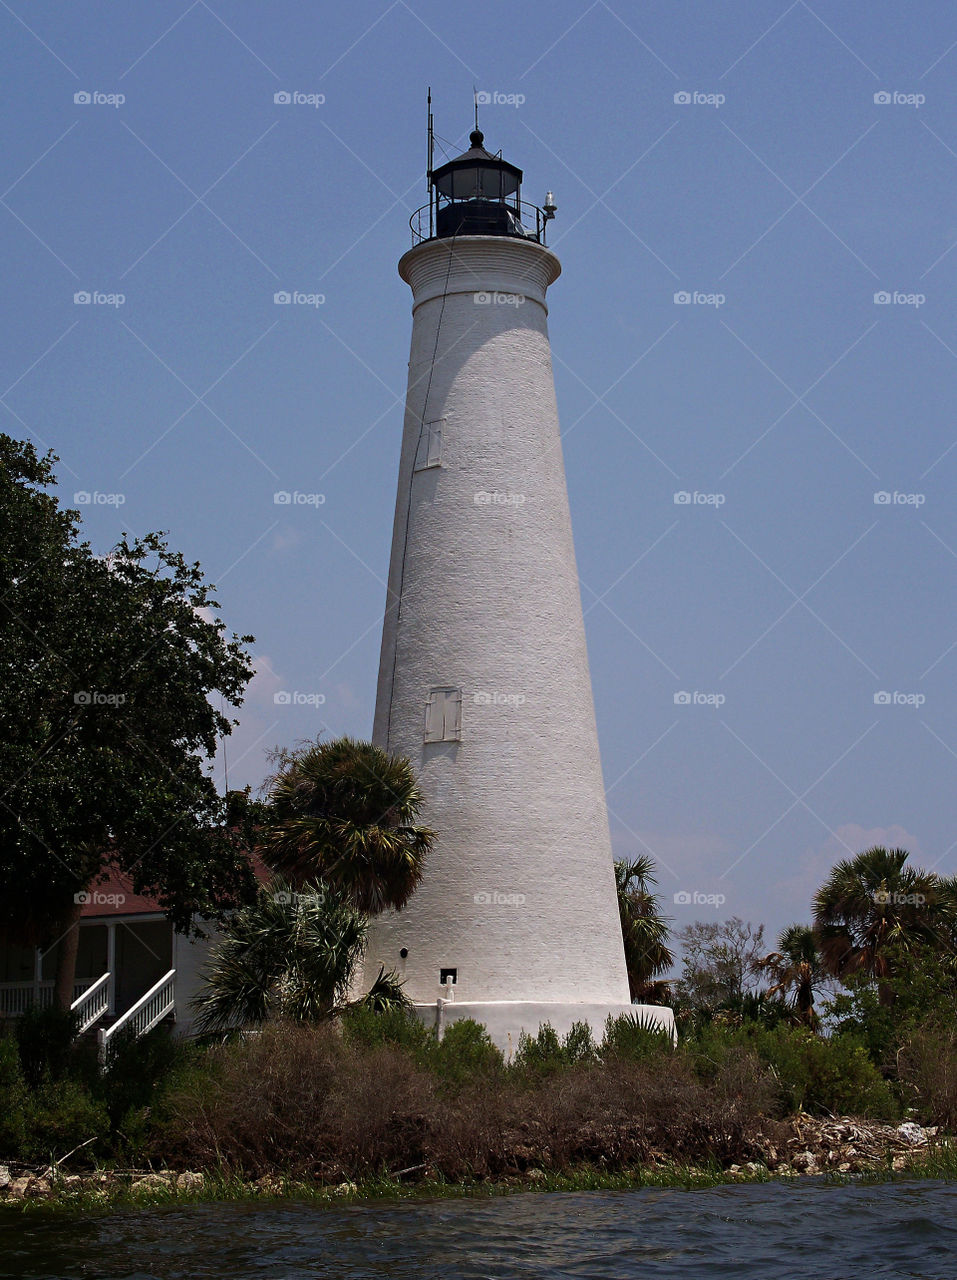 St. Marks lighthouse